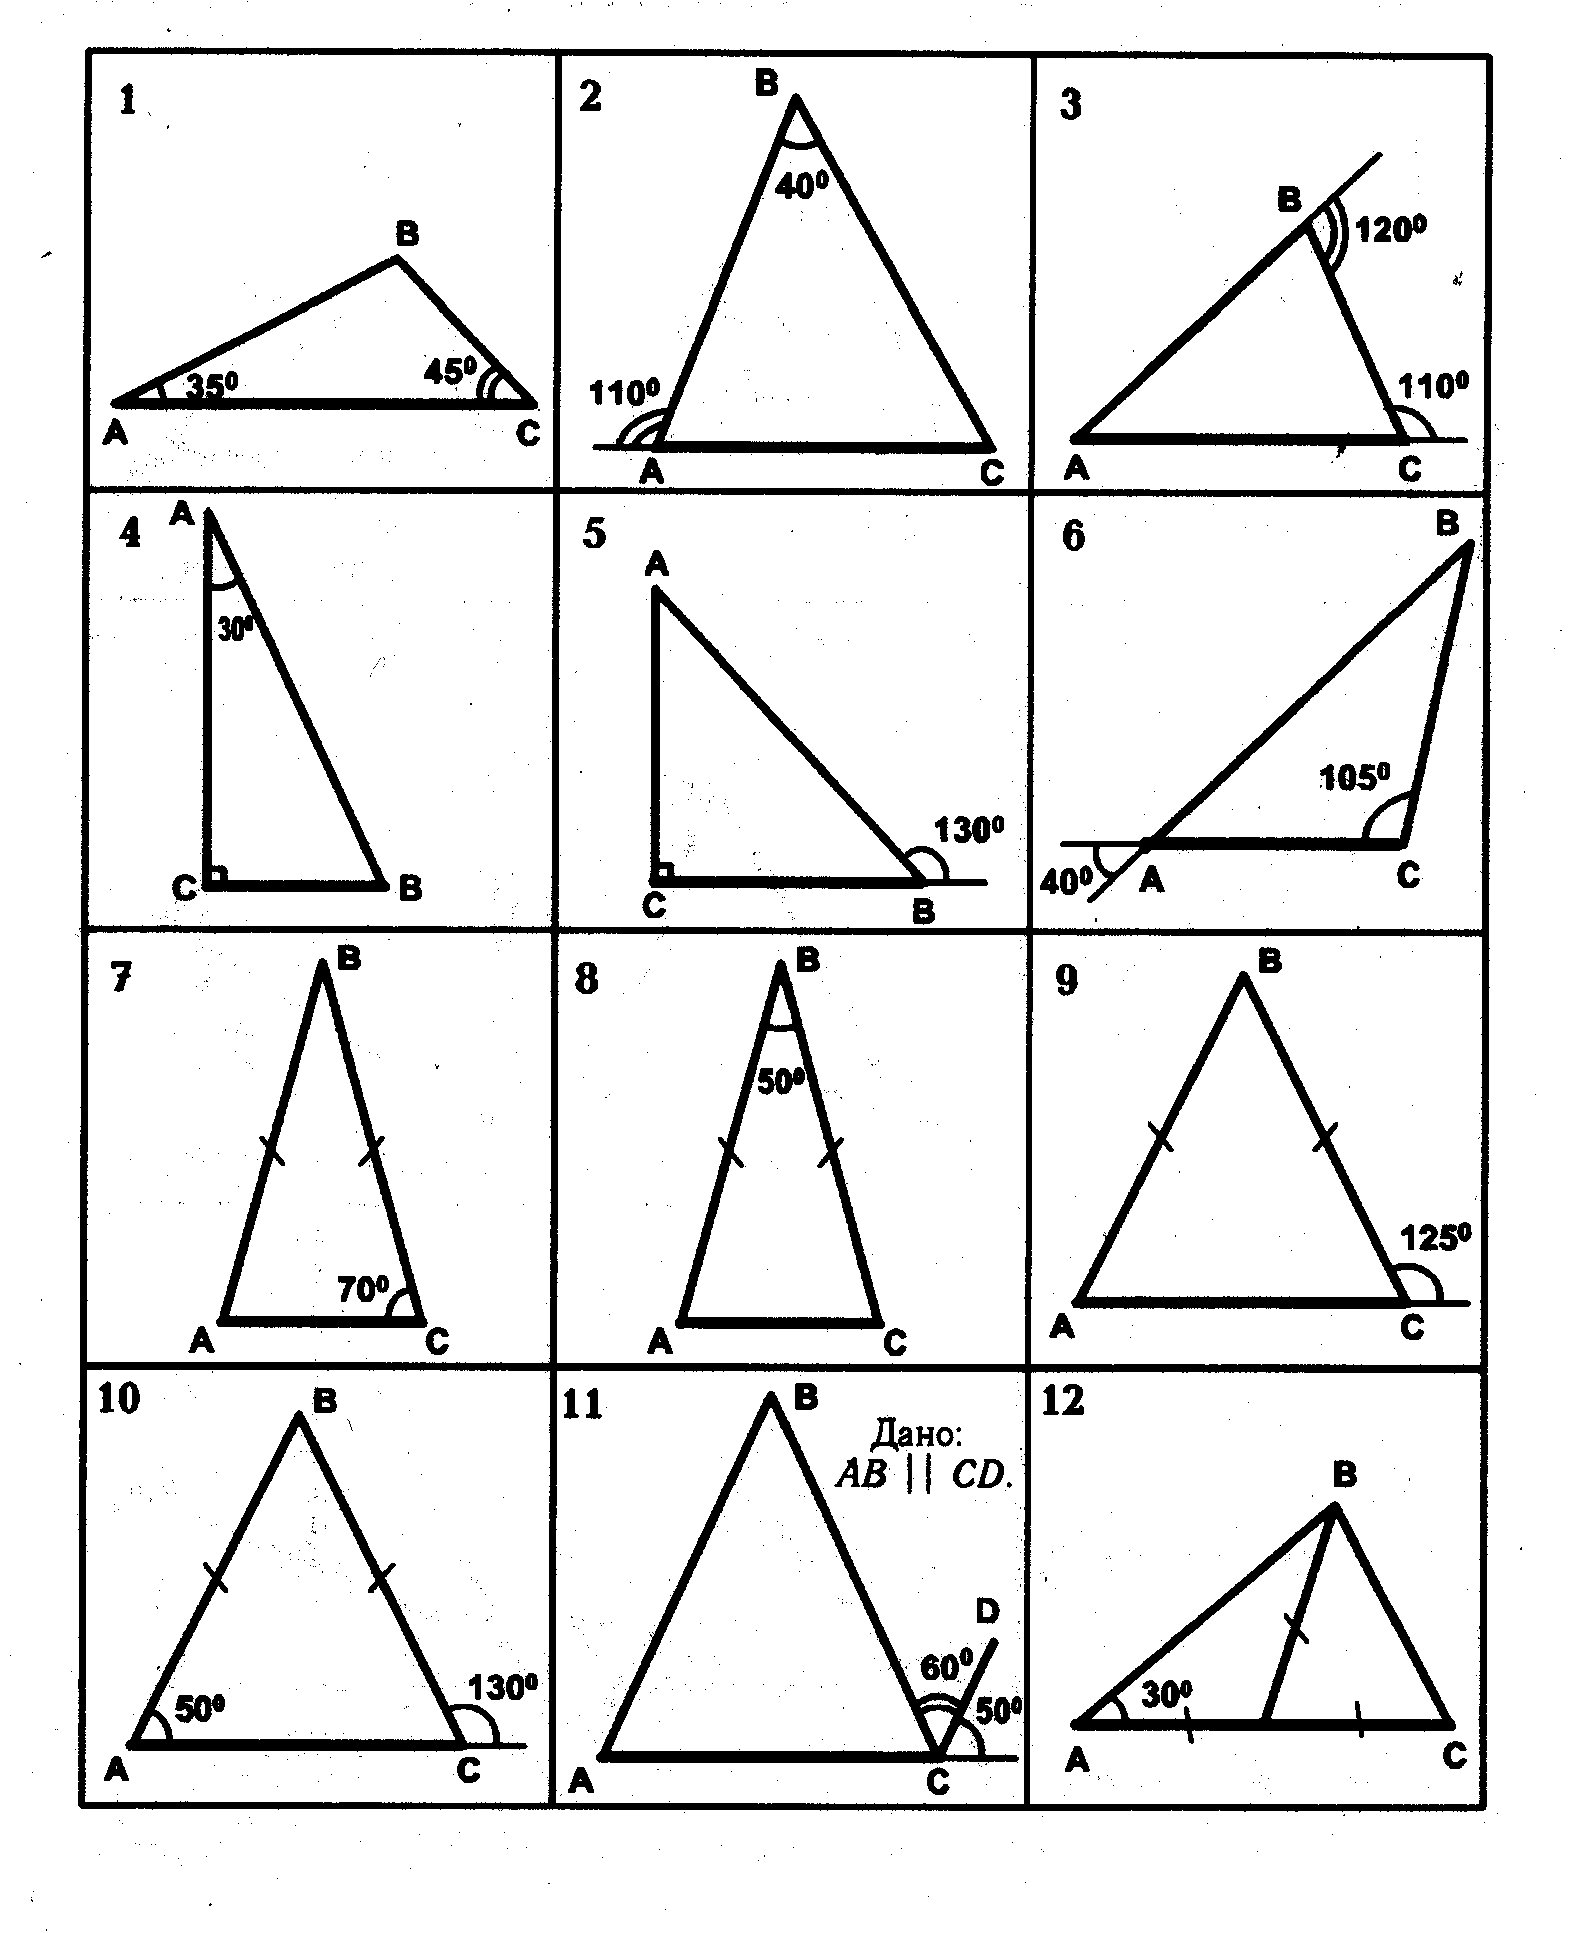 Задачи на чертежах 7 классы. Гдз по геометрии Рабинович 7-9 класс задачи на готовых чертежах. Сумма углов треугольника задачи на готовых чертежах. Сумма углов в треугольнике задачи по готовым чертежам. Сумма углов треугольника задачи на готовых чертежах 7.